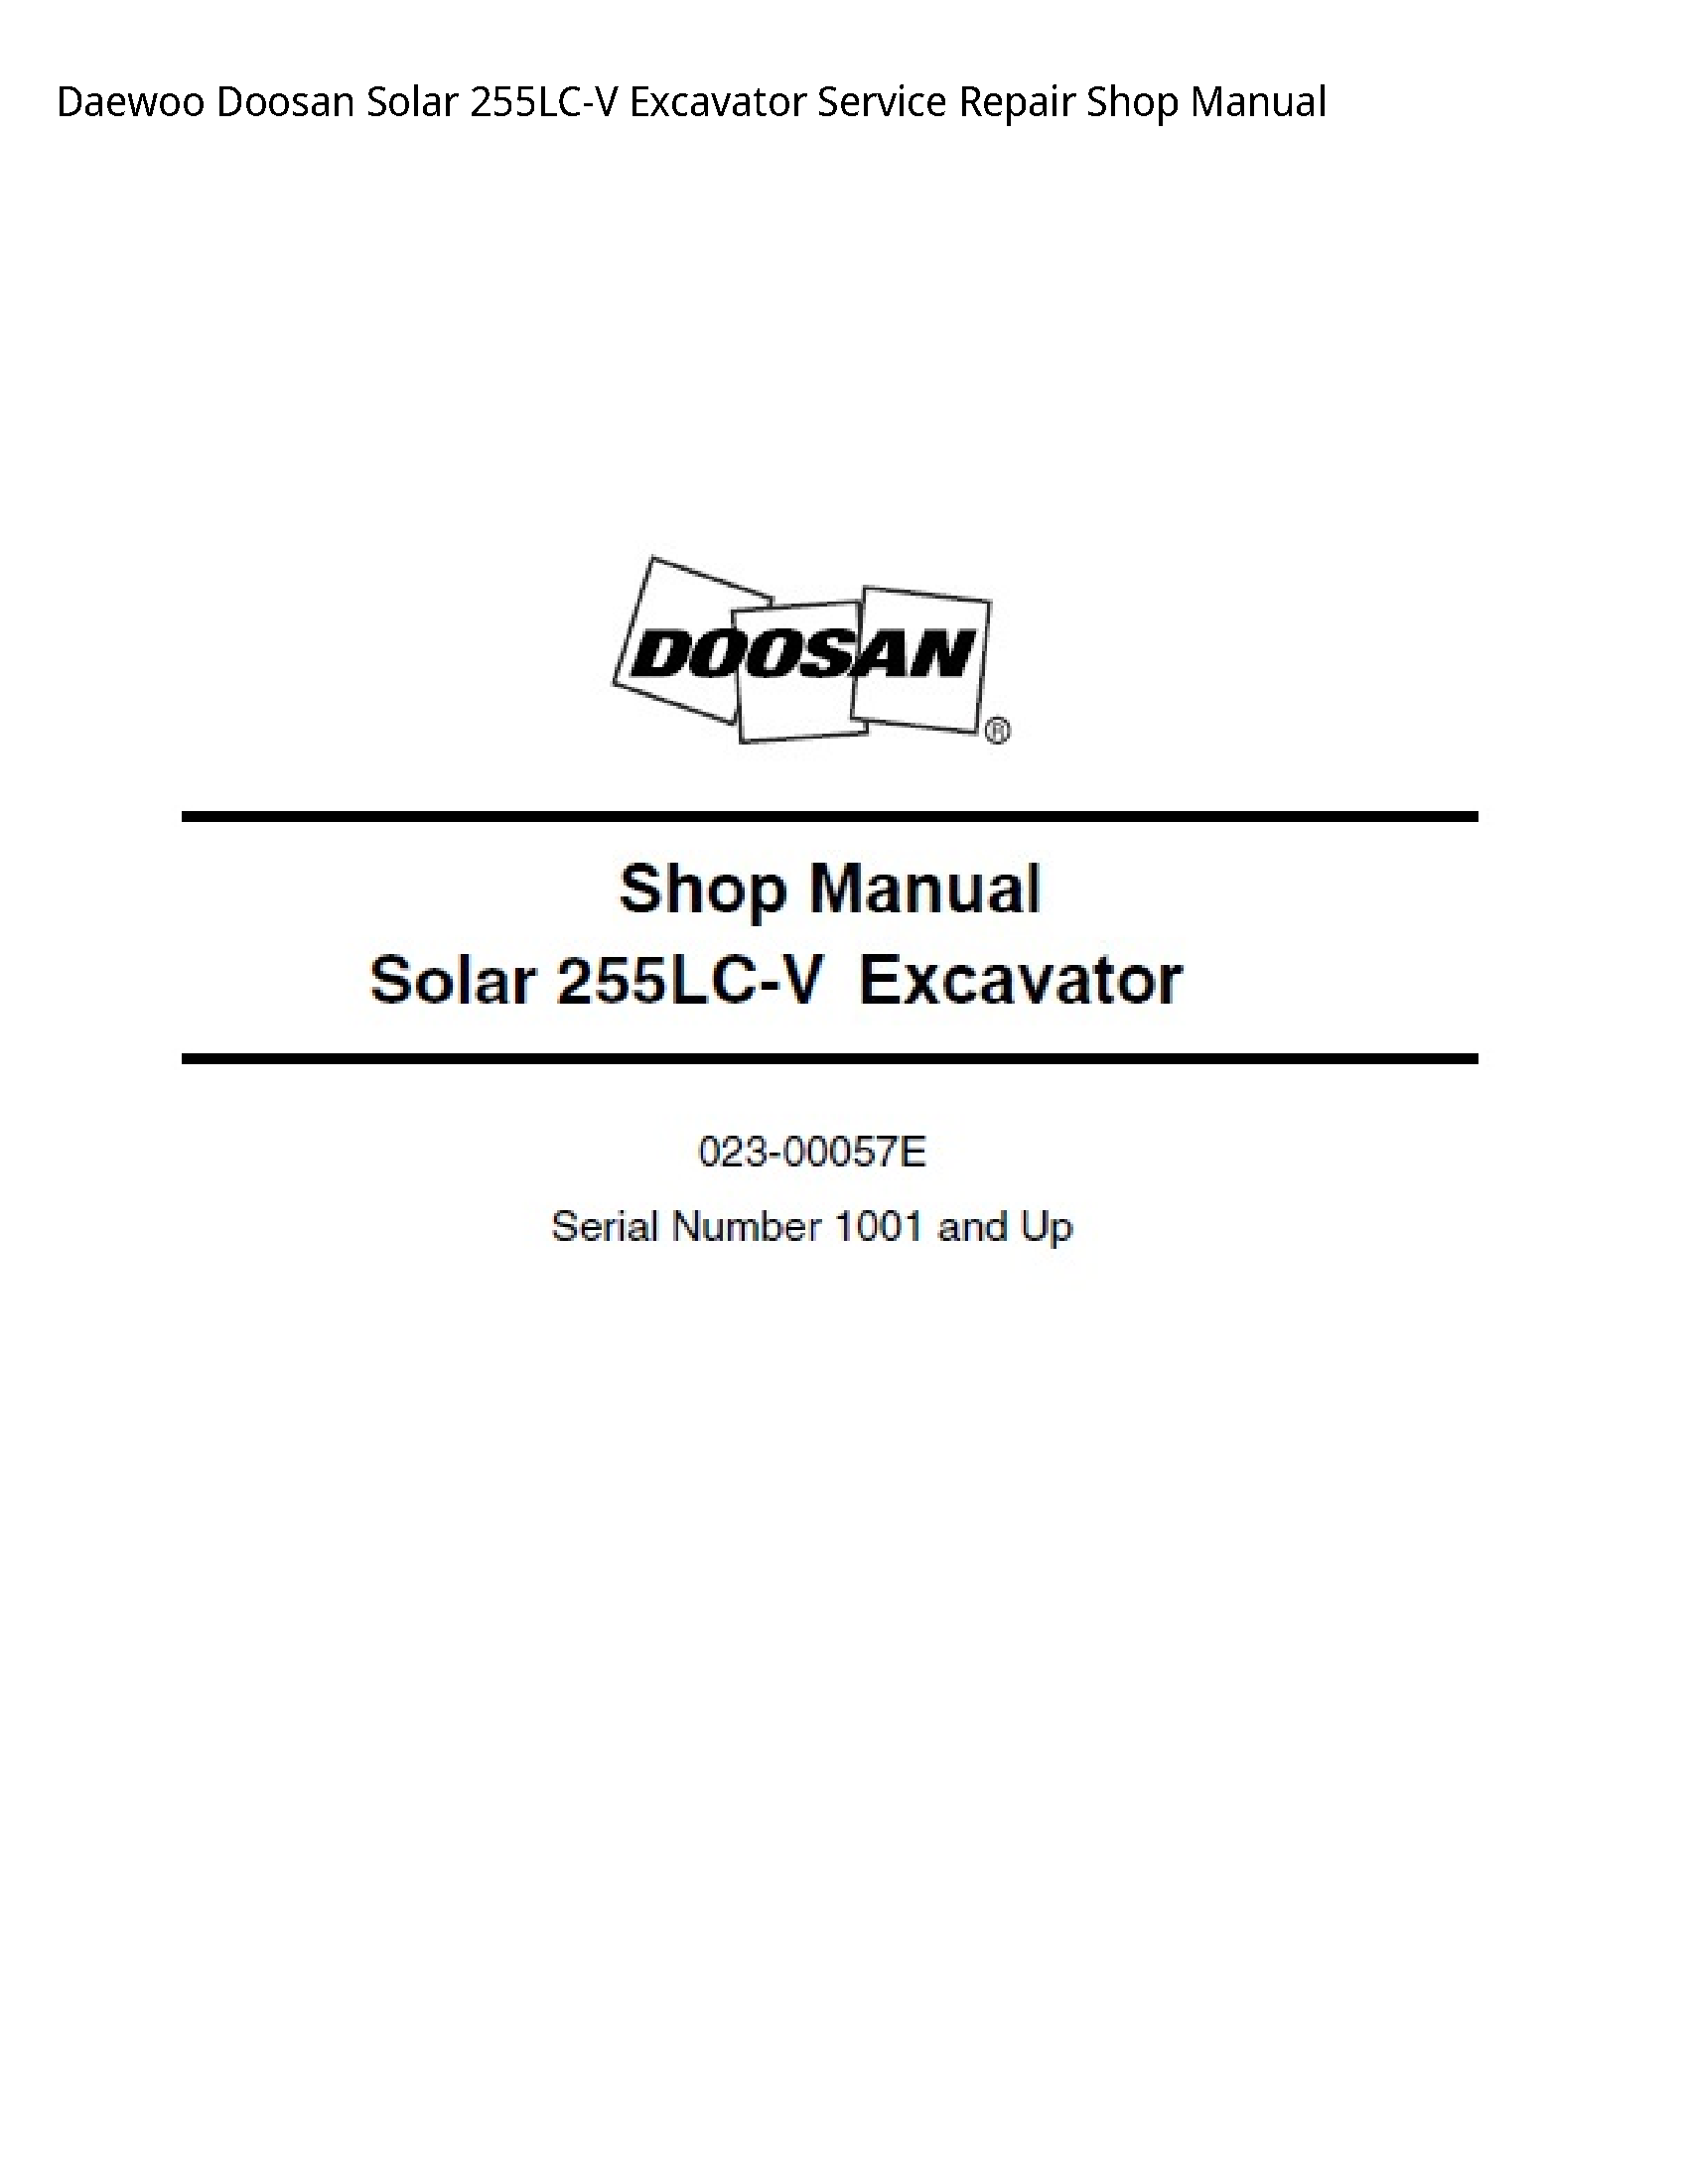 Daewoo Doosan 255LC-V Solar Excavator manual